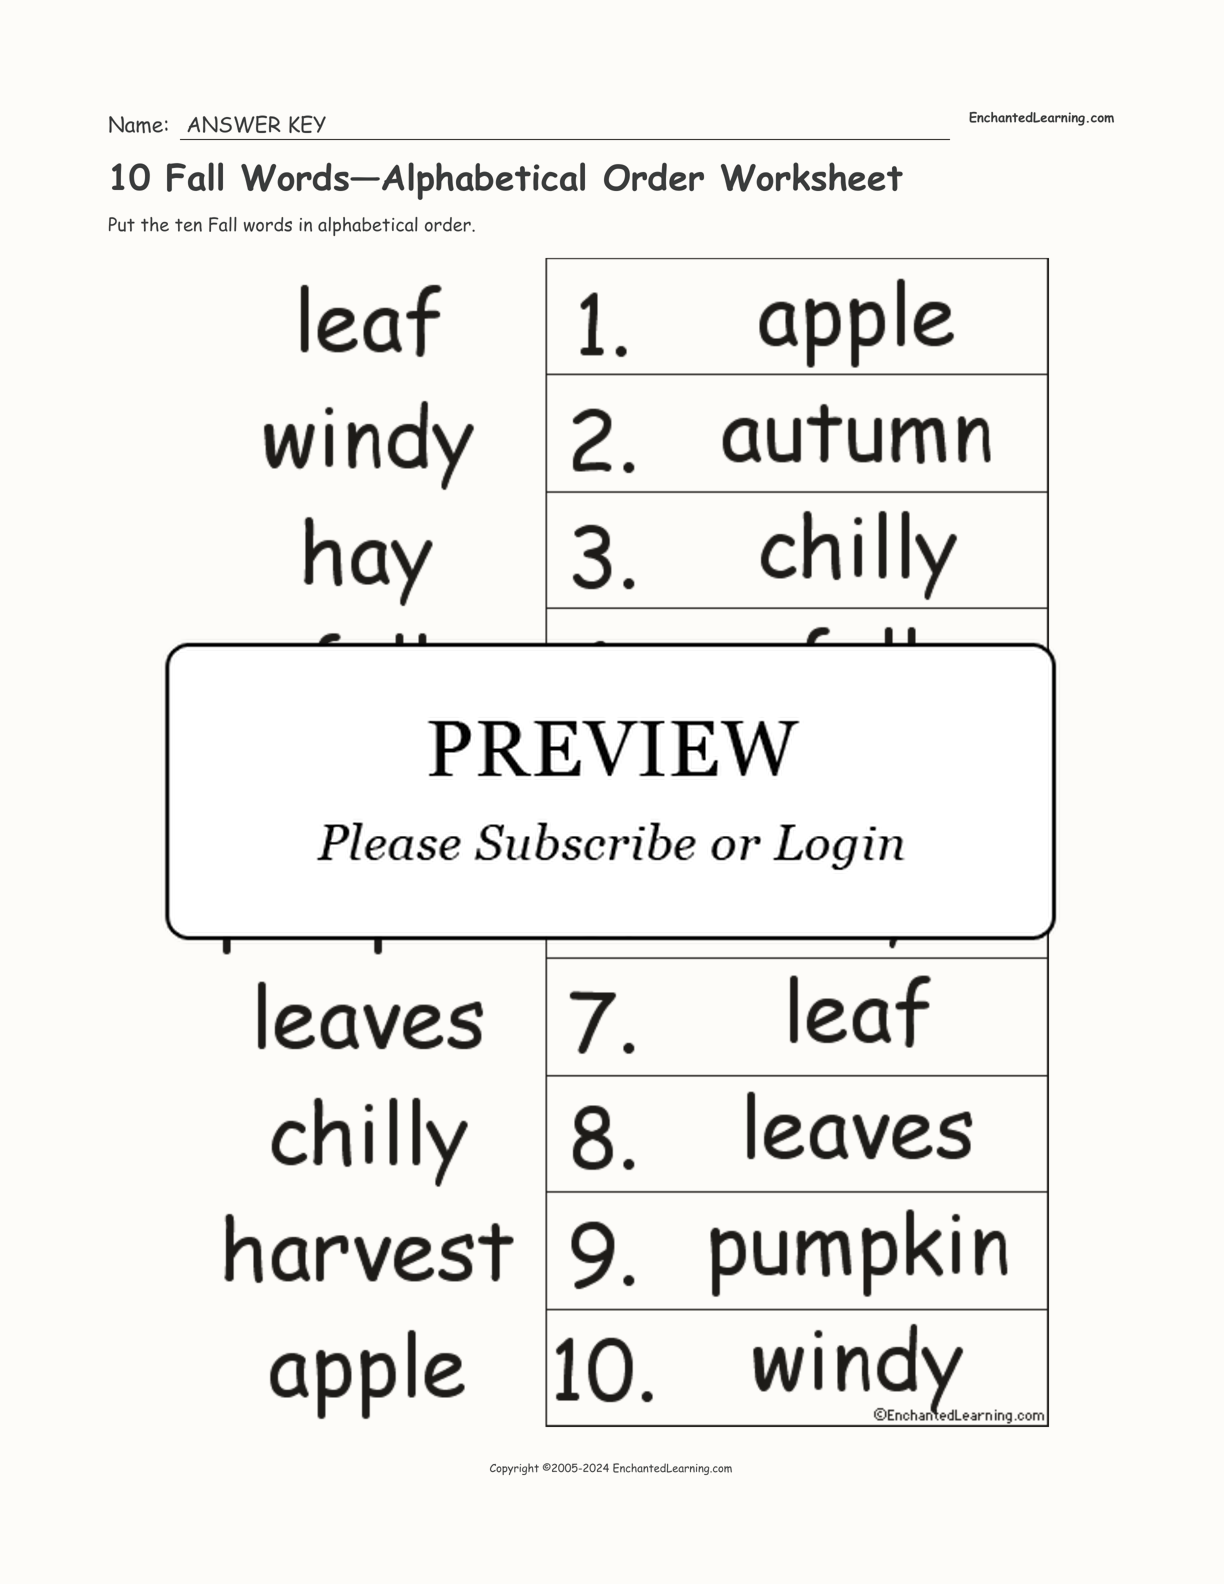 10 Fall Words—Alphabetical Order Worksheet interactive worksheet page 2